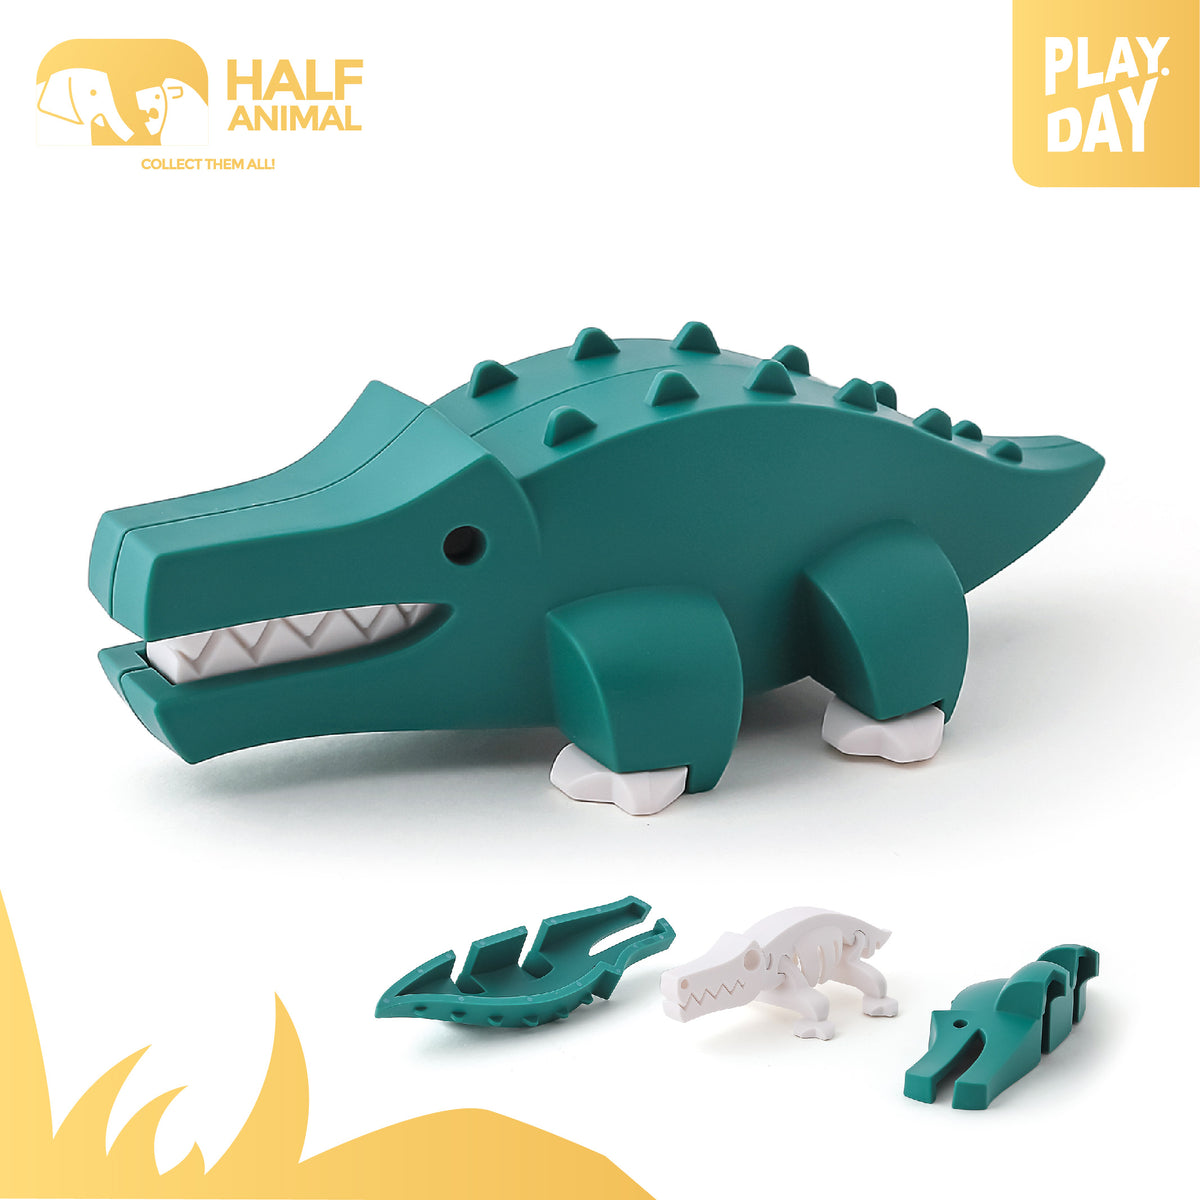 Halftoys Half Animal - Crocodile